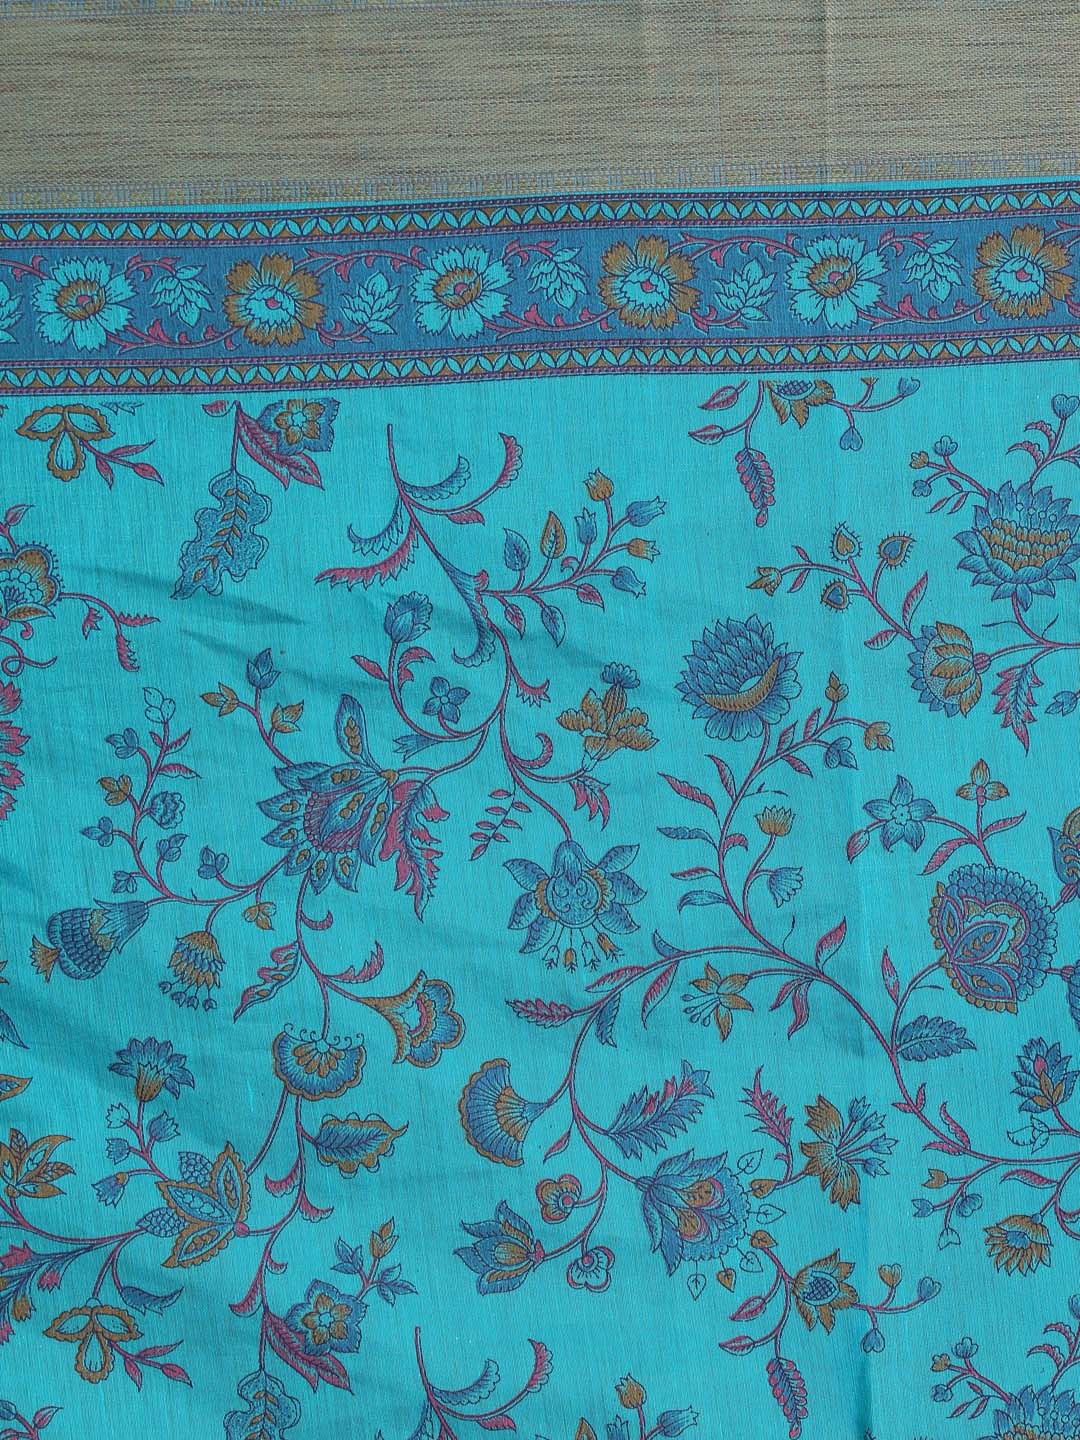 Indethnic Printed Cotton Blend Saree in Firoza - Saree Detail View